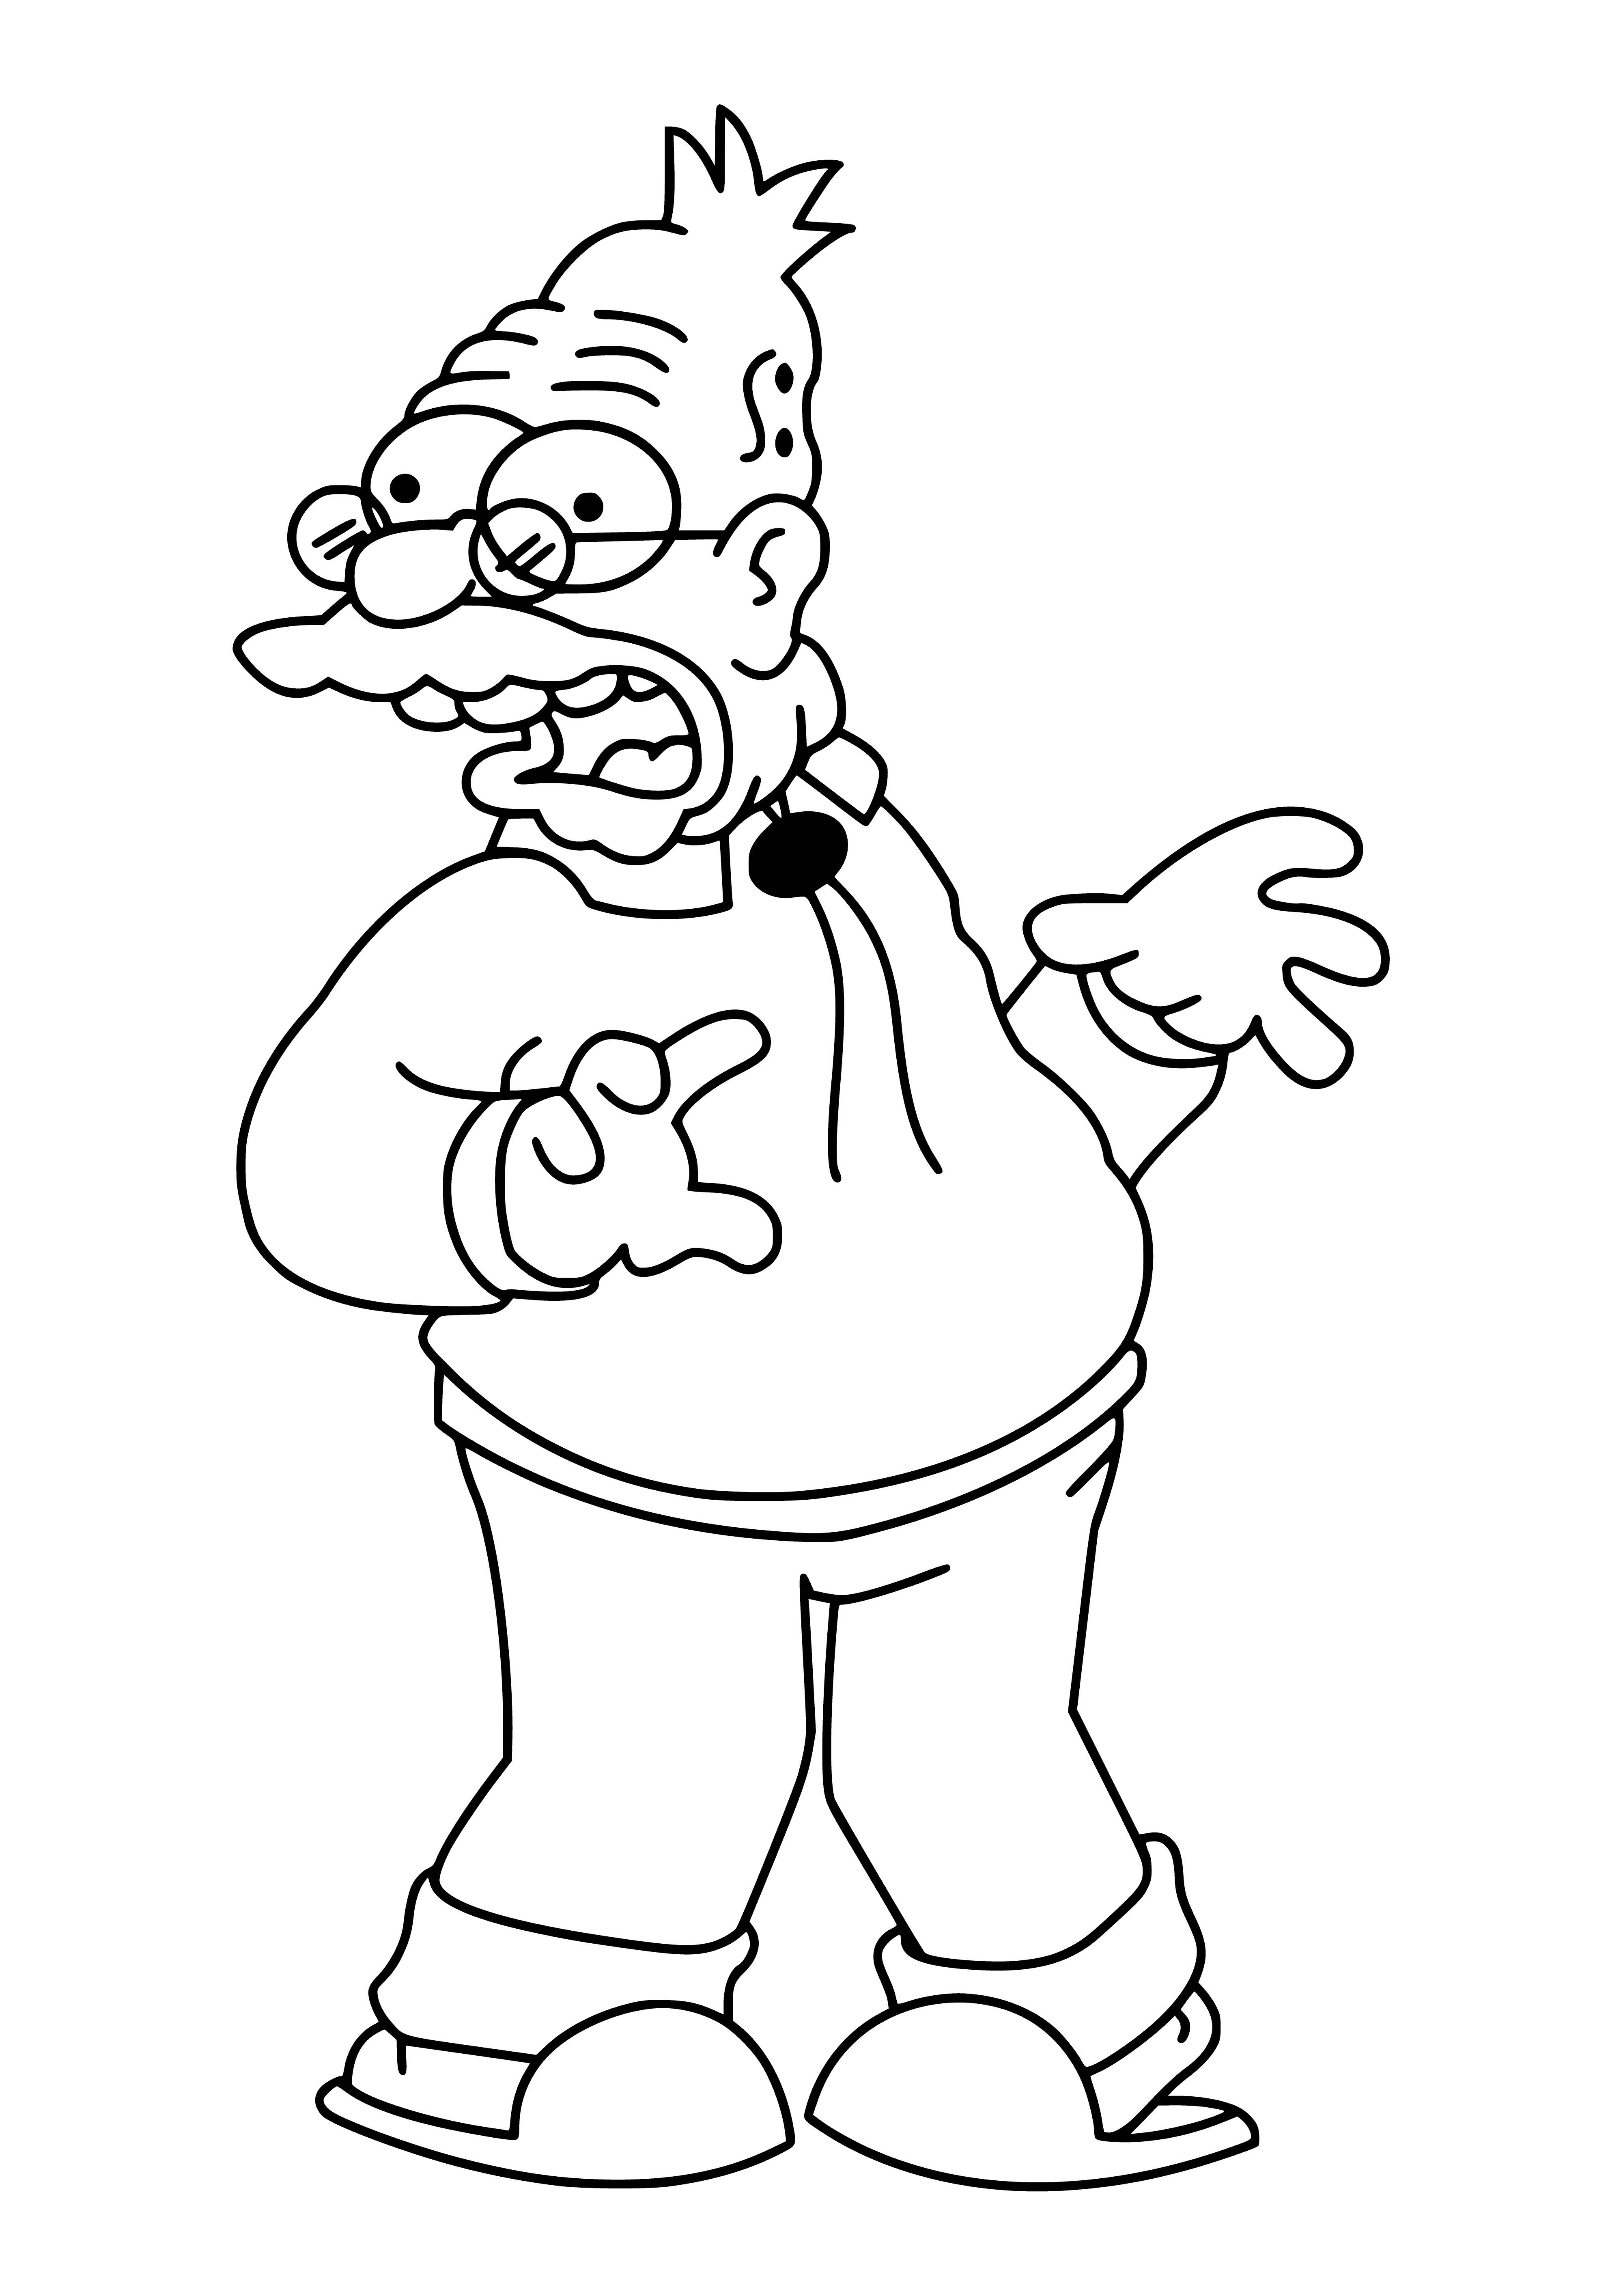 Homers Vater - Abraham Simpson Malseite